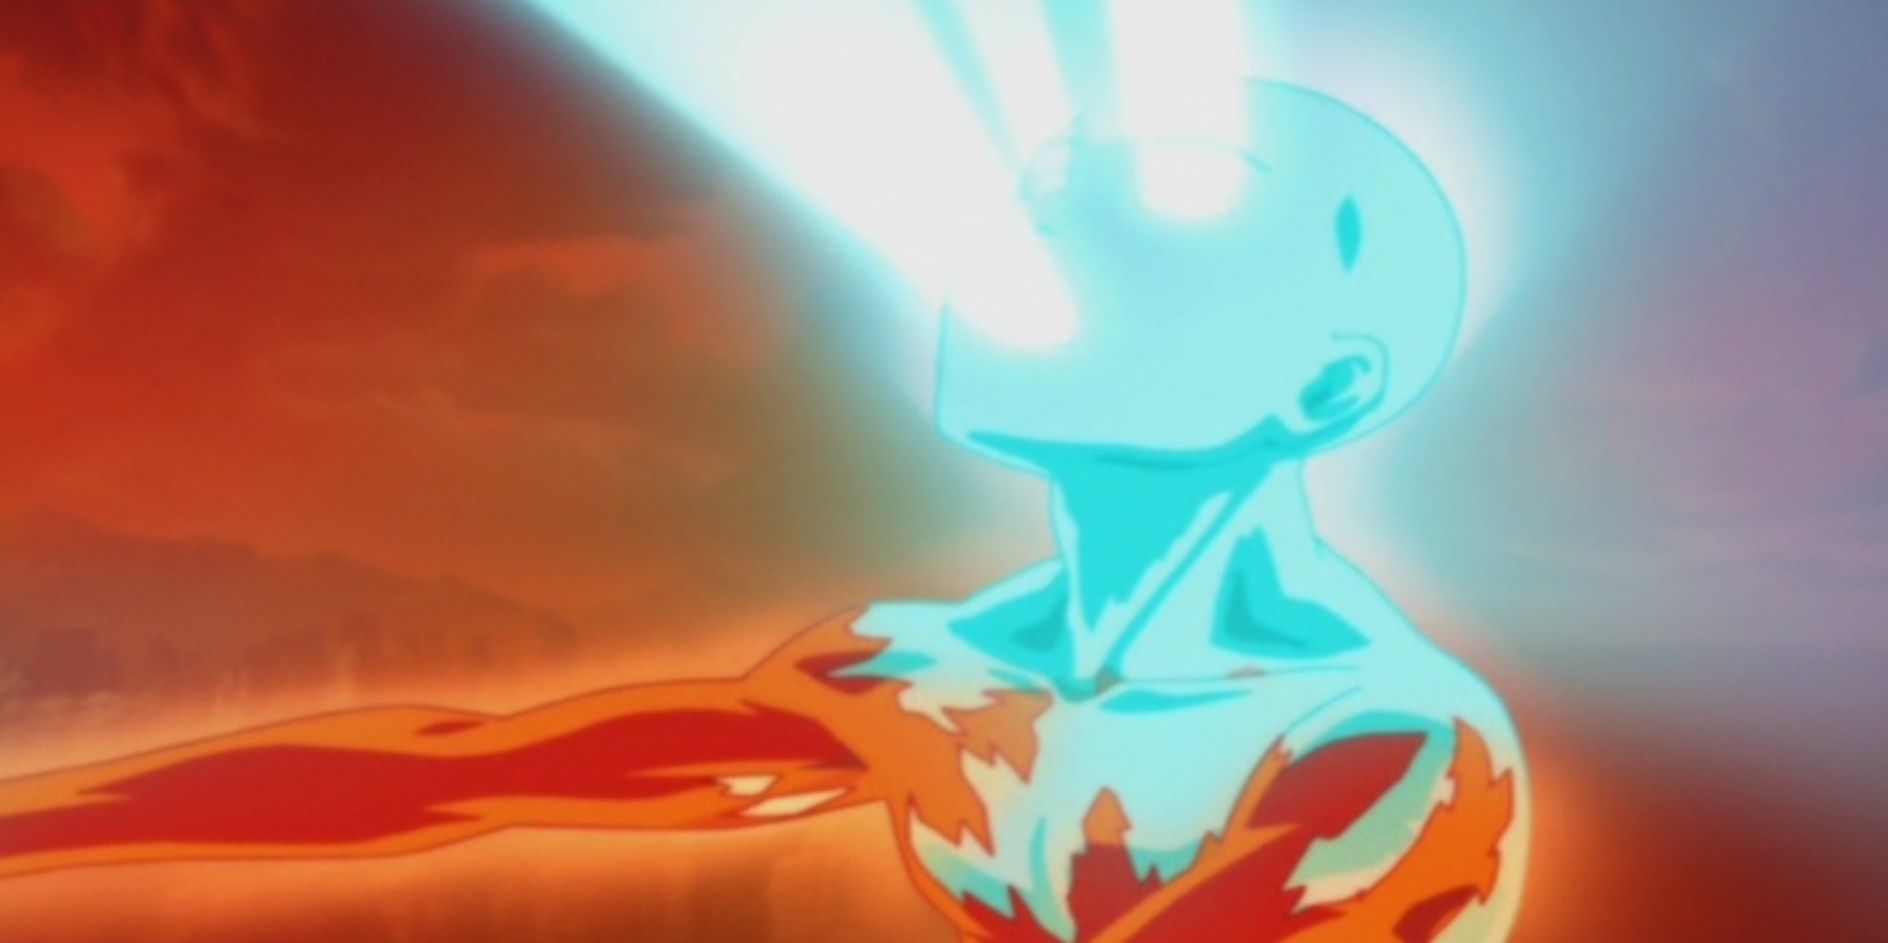 Aang removing Ozai's bending in Avatar the Last Airbender